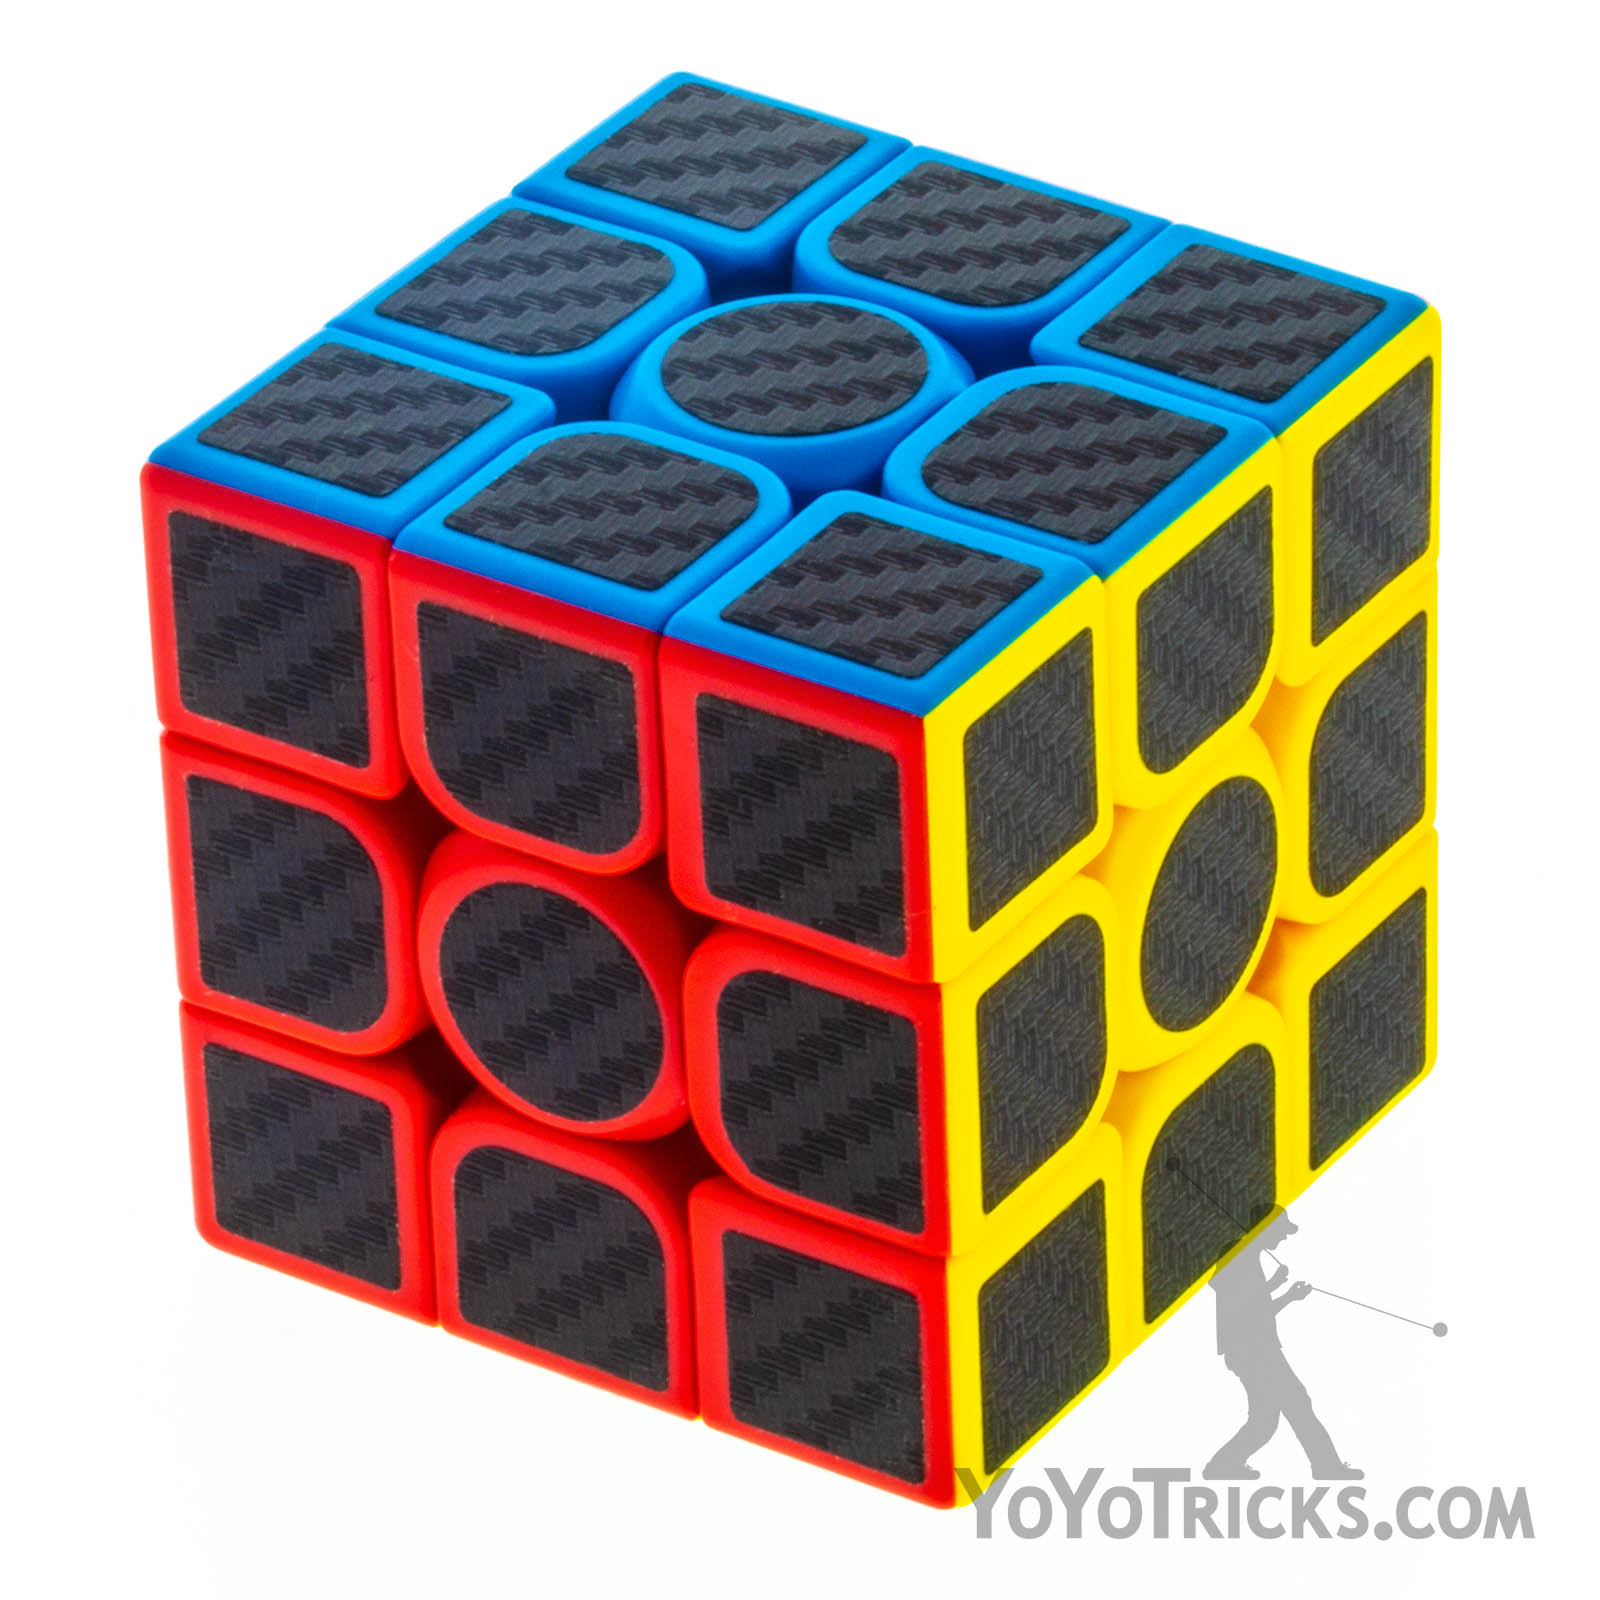 https://yoyotricks.com/wp-content/uploads/2022/09/Inverted-Colors-3x3-Speed-Cube.jpg